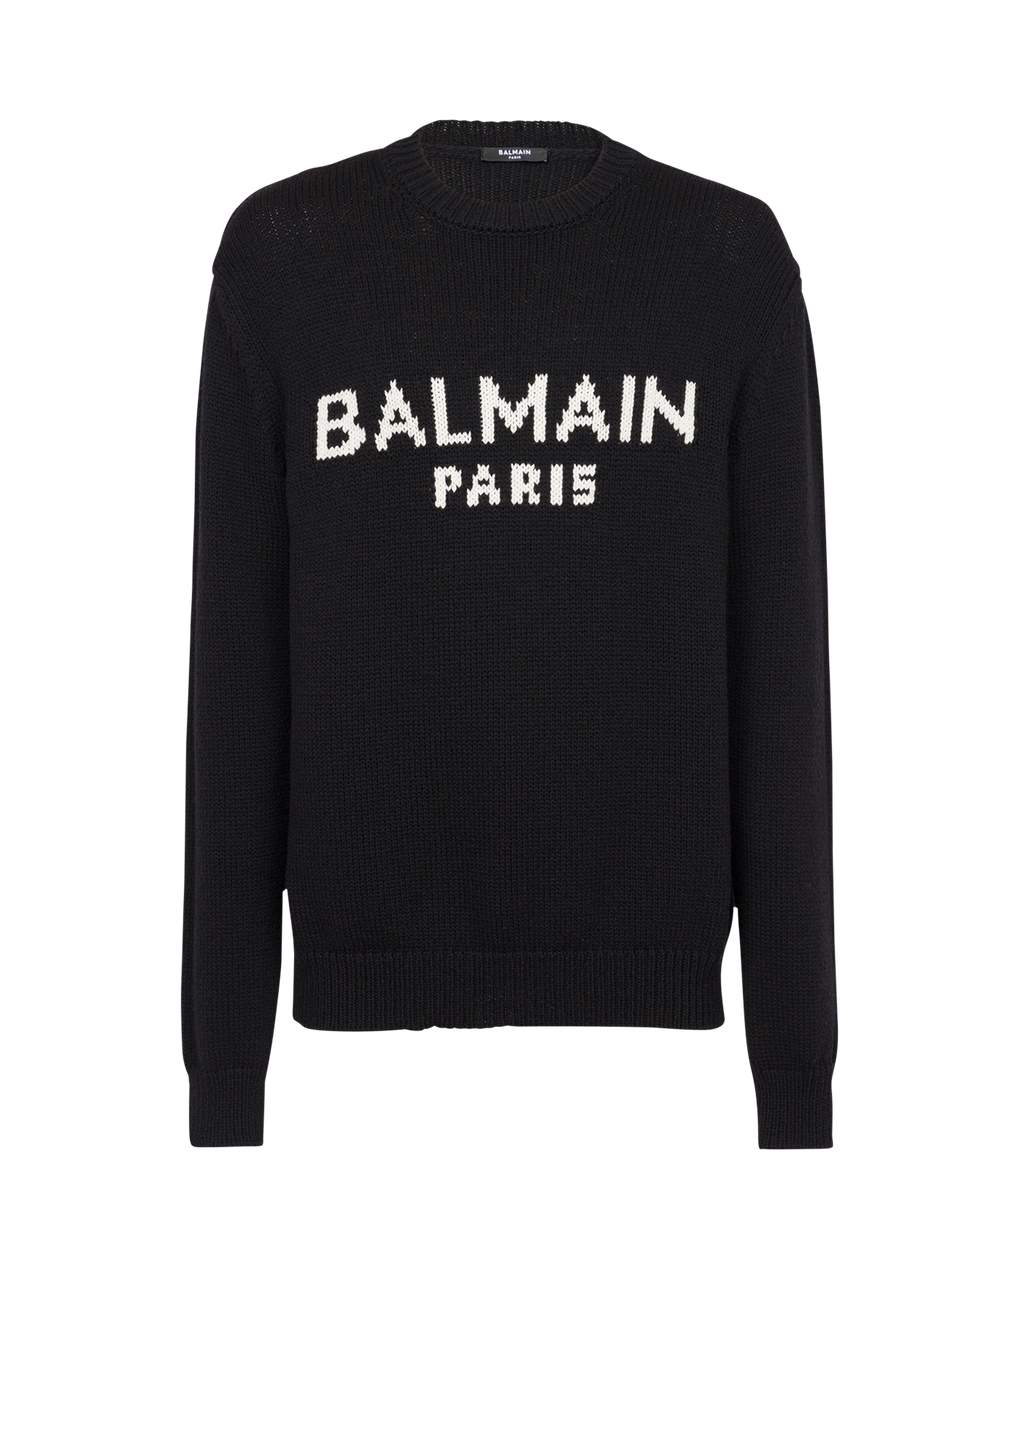 Jersey de lana merino con logotipo de Balmain Paris blanco, negro, hi-res